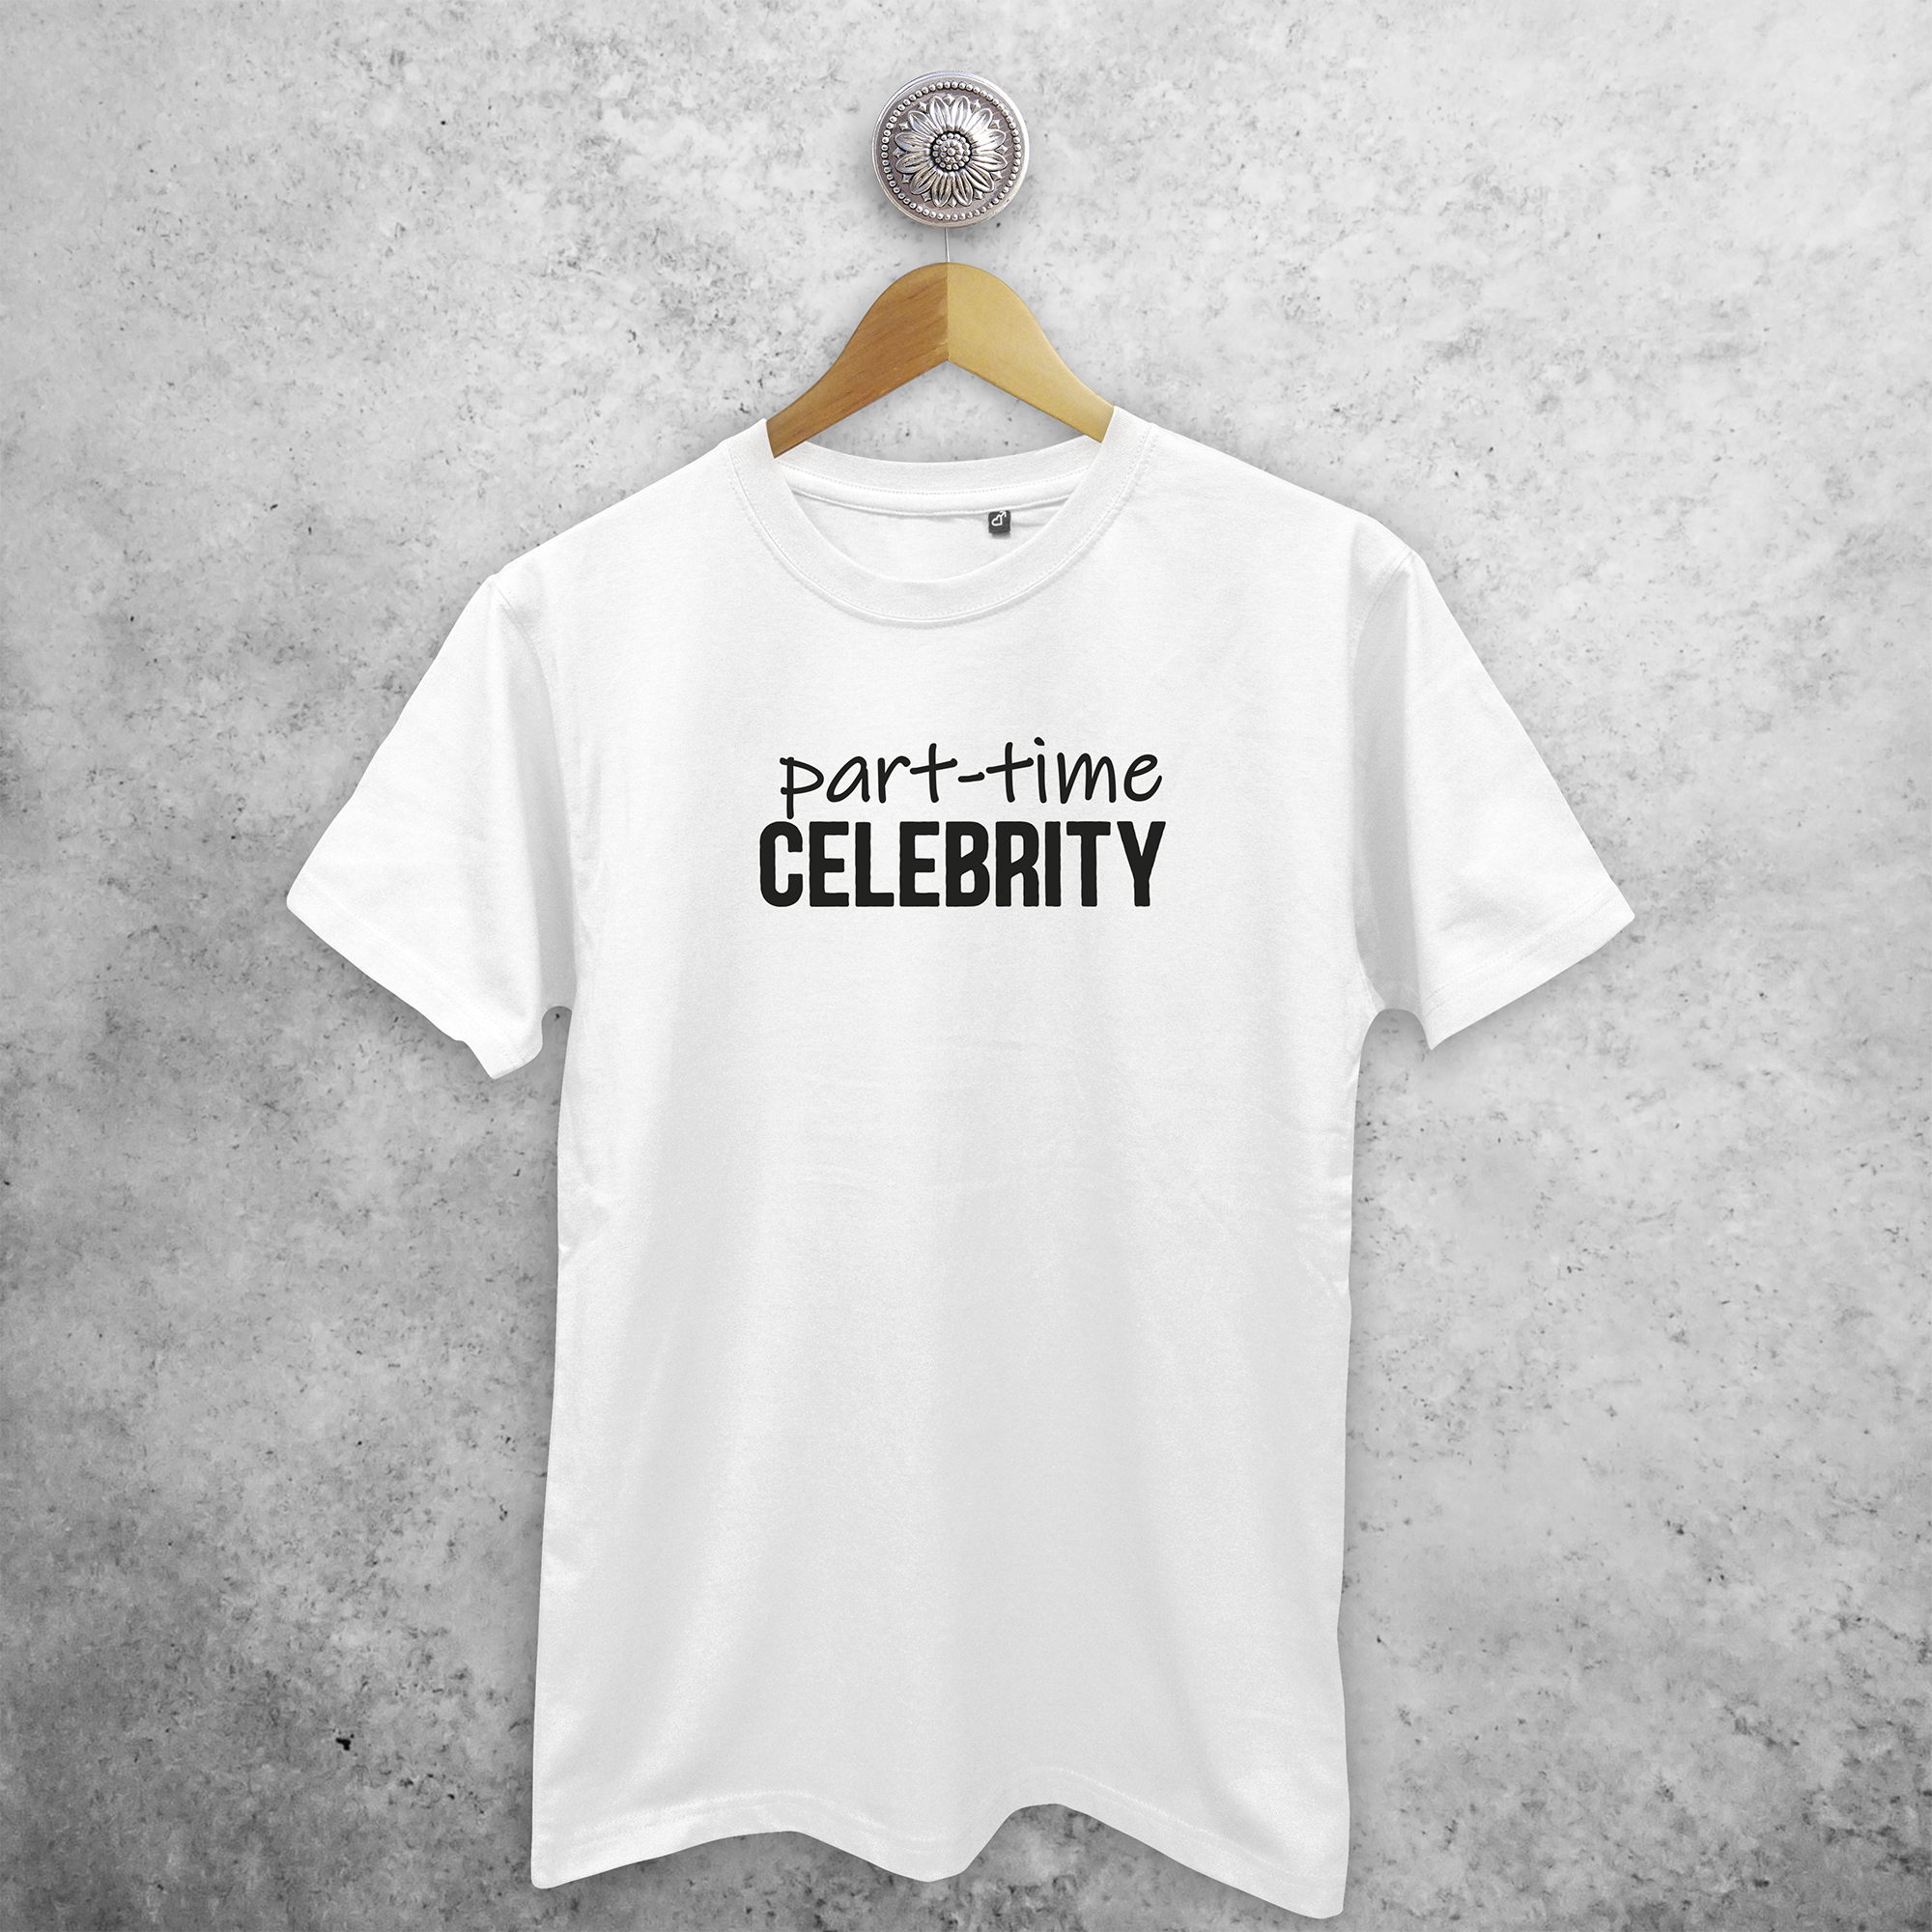 'Part-time celebrity' adult shirt